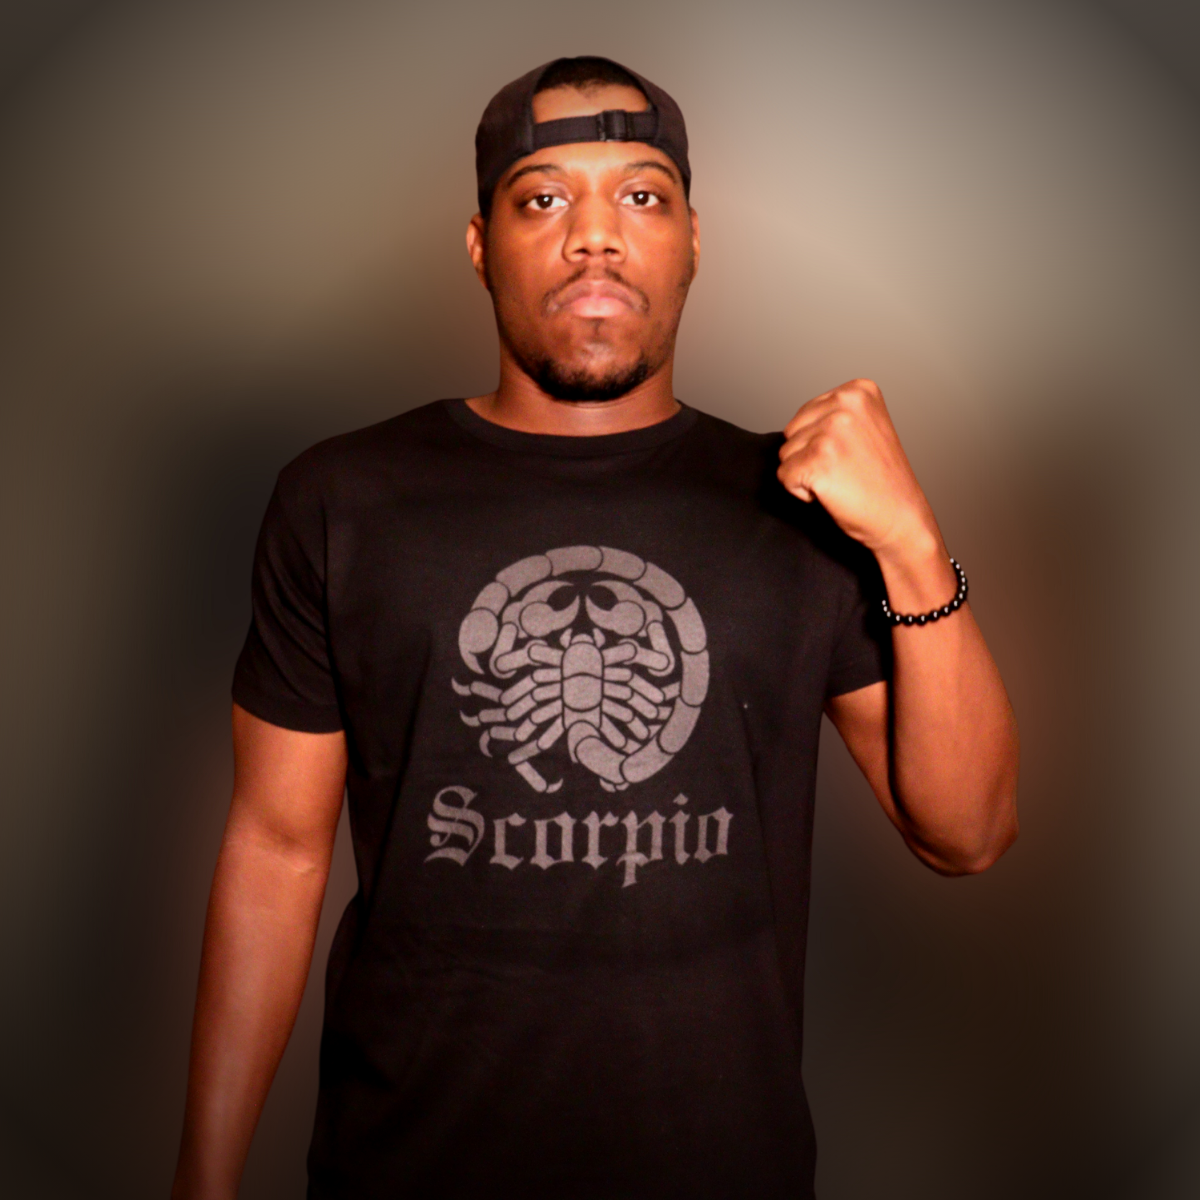 Scorpio - Black & Black T-Shirt